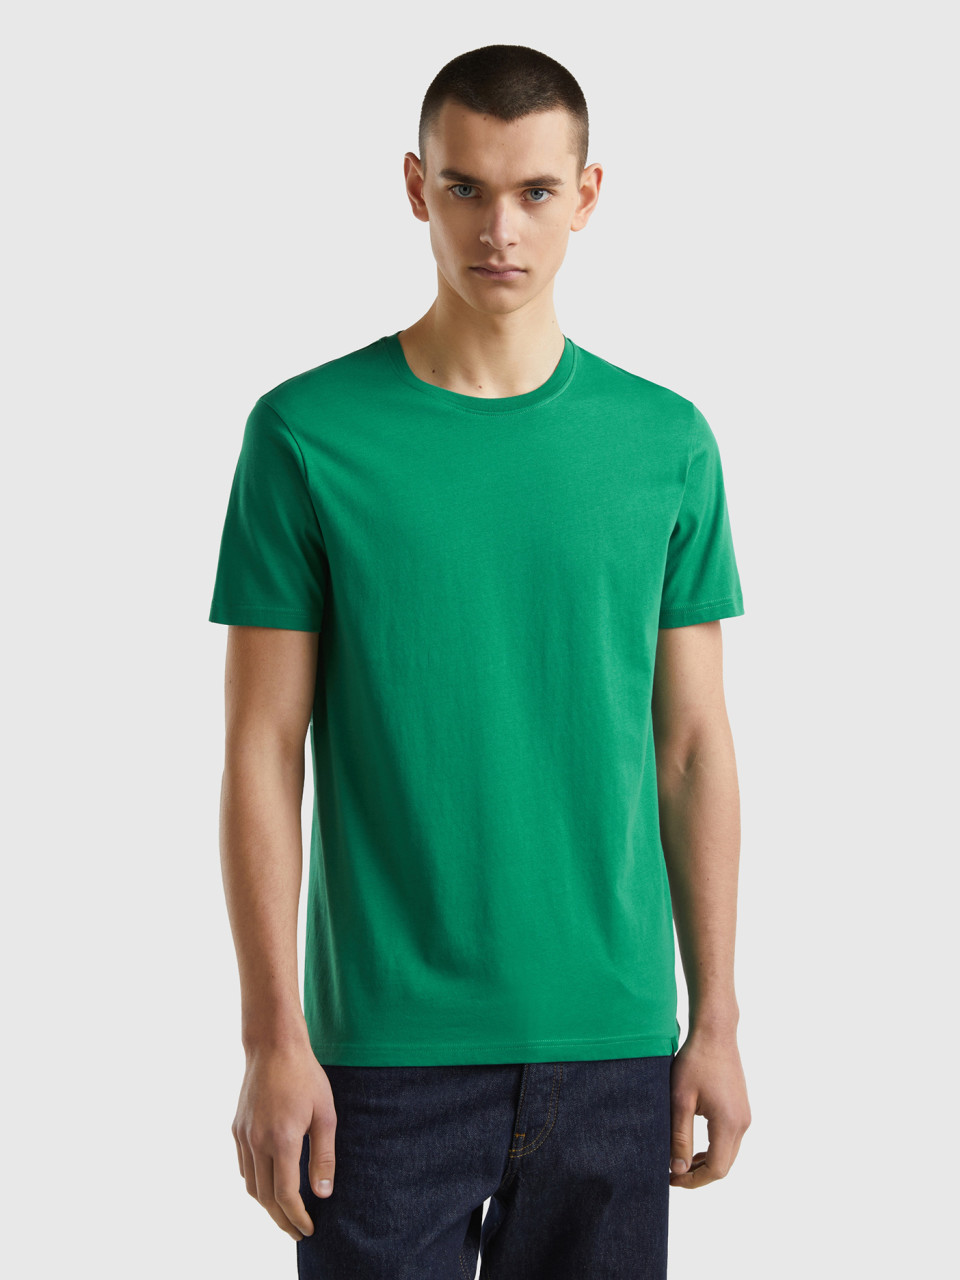 Benetton, Dunkelgrünes T-shirt, Dunkelgrün, male